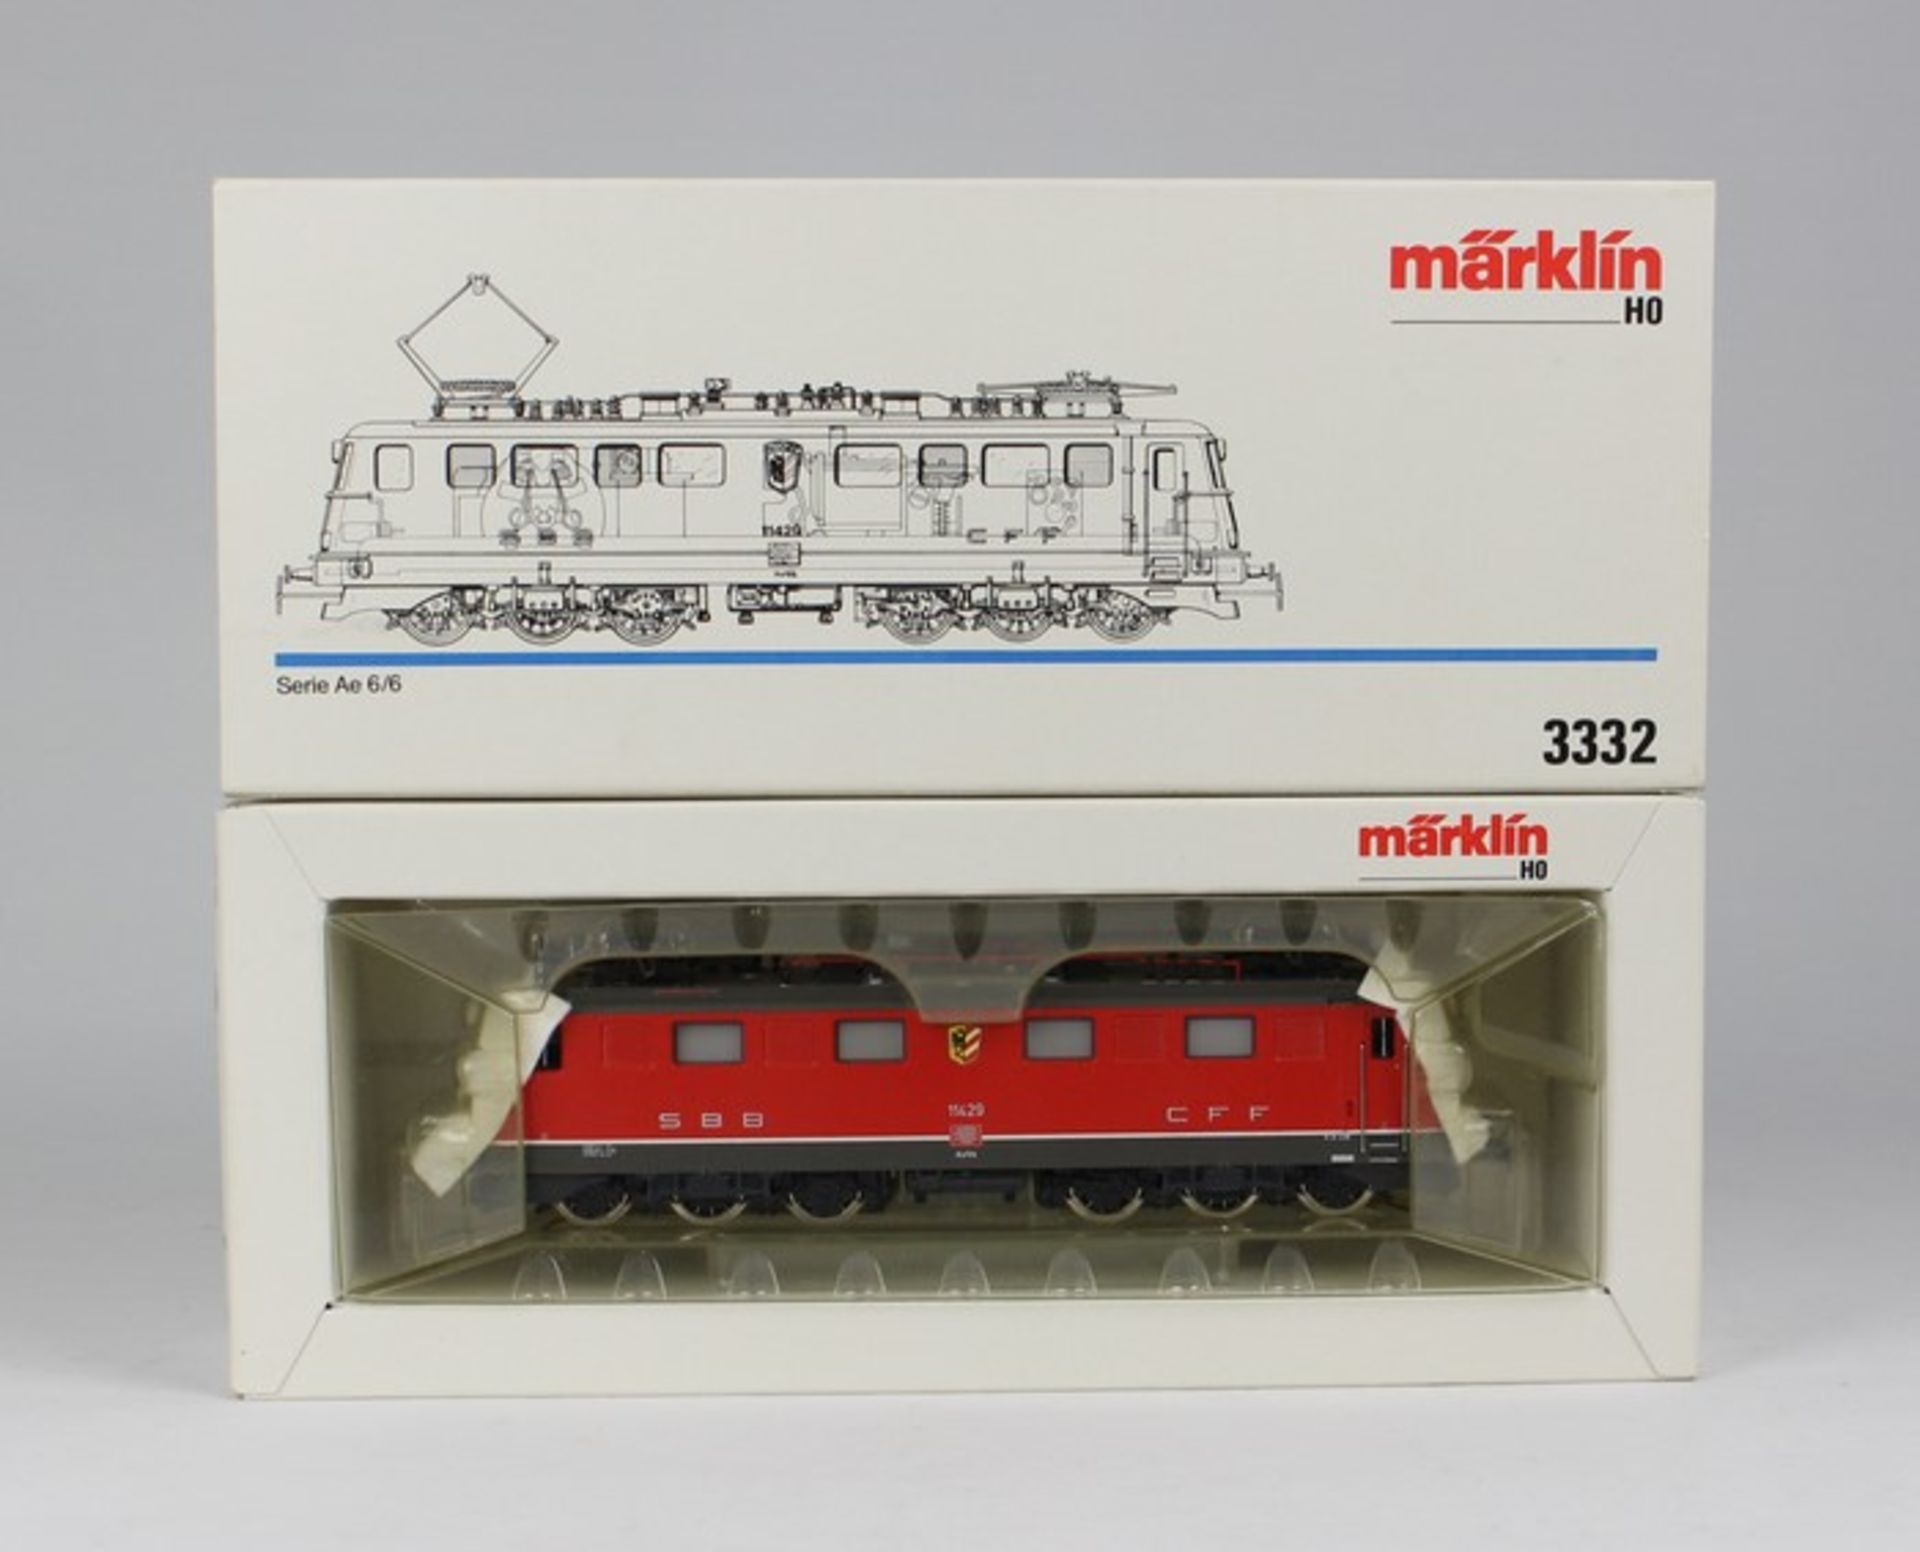 Märklin - EisenbahnE-Lok 3332, Serie Ae 6/6, 11429, SBB CFF, rot, Stadtwappen Altdorf, OK,